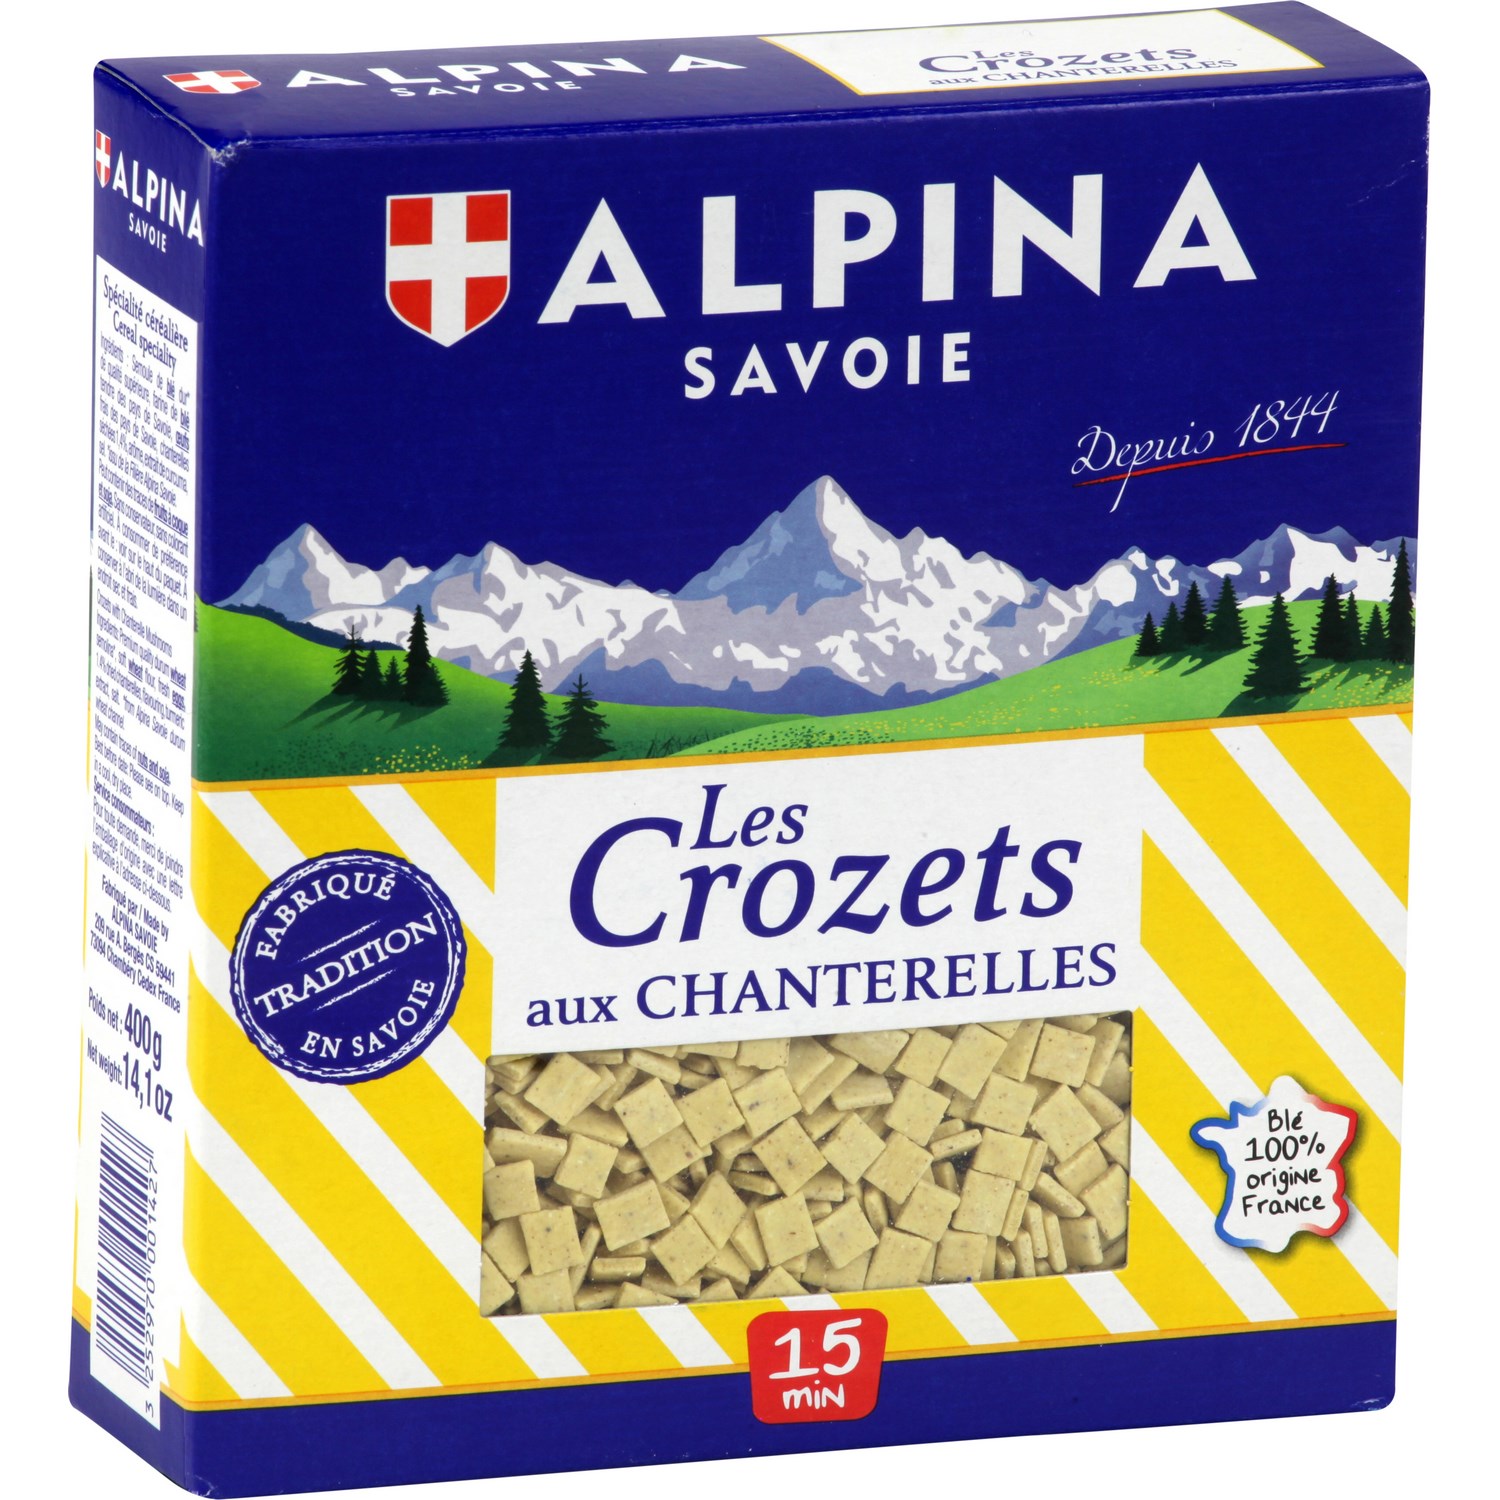 Alpina Pasta Les Crozets with Chanterelles (wild mushrooms) 400g